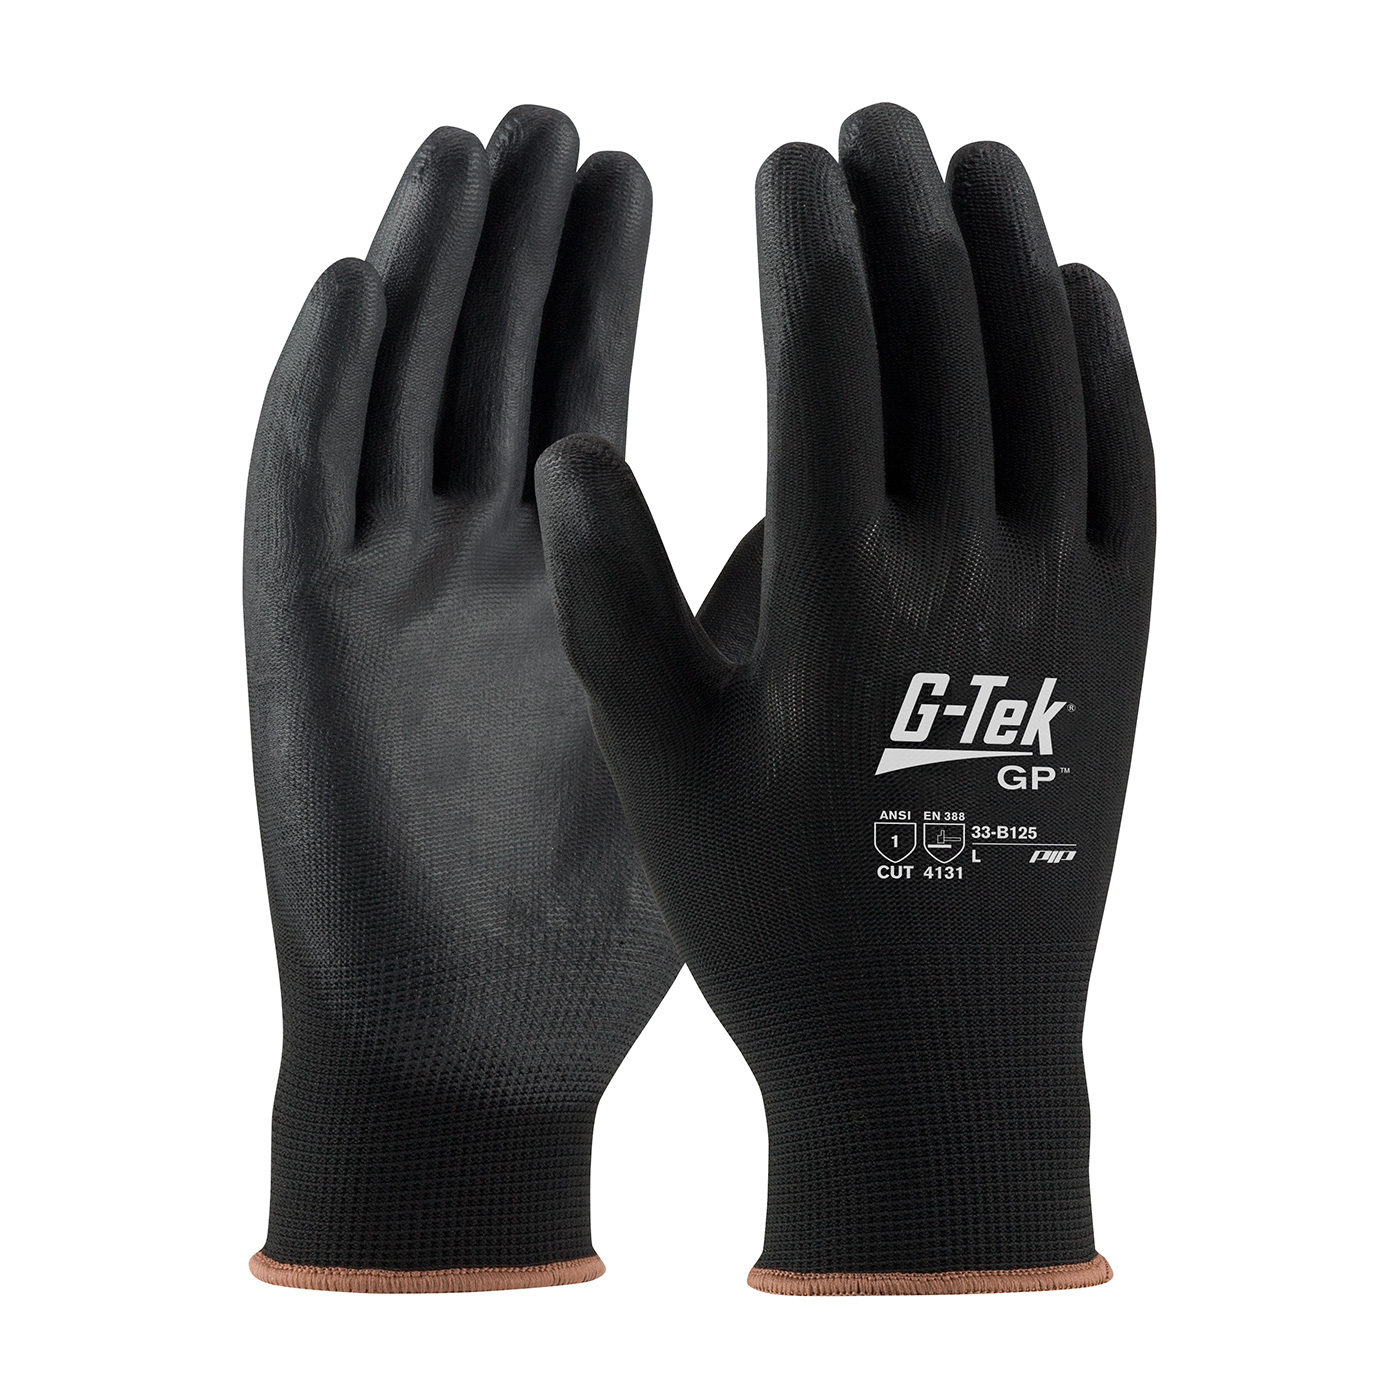 PIP 33-B125/XXL G-Tek GP Hi-Vis Seamless Knit Polyester Glove with Polyurethane Coated Smooth Grip on Palm & Fingers - 2X-Large PID-33 B125 XXL